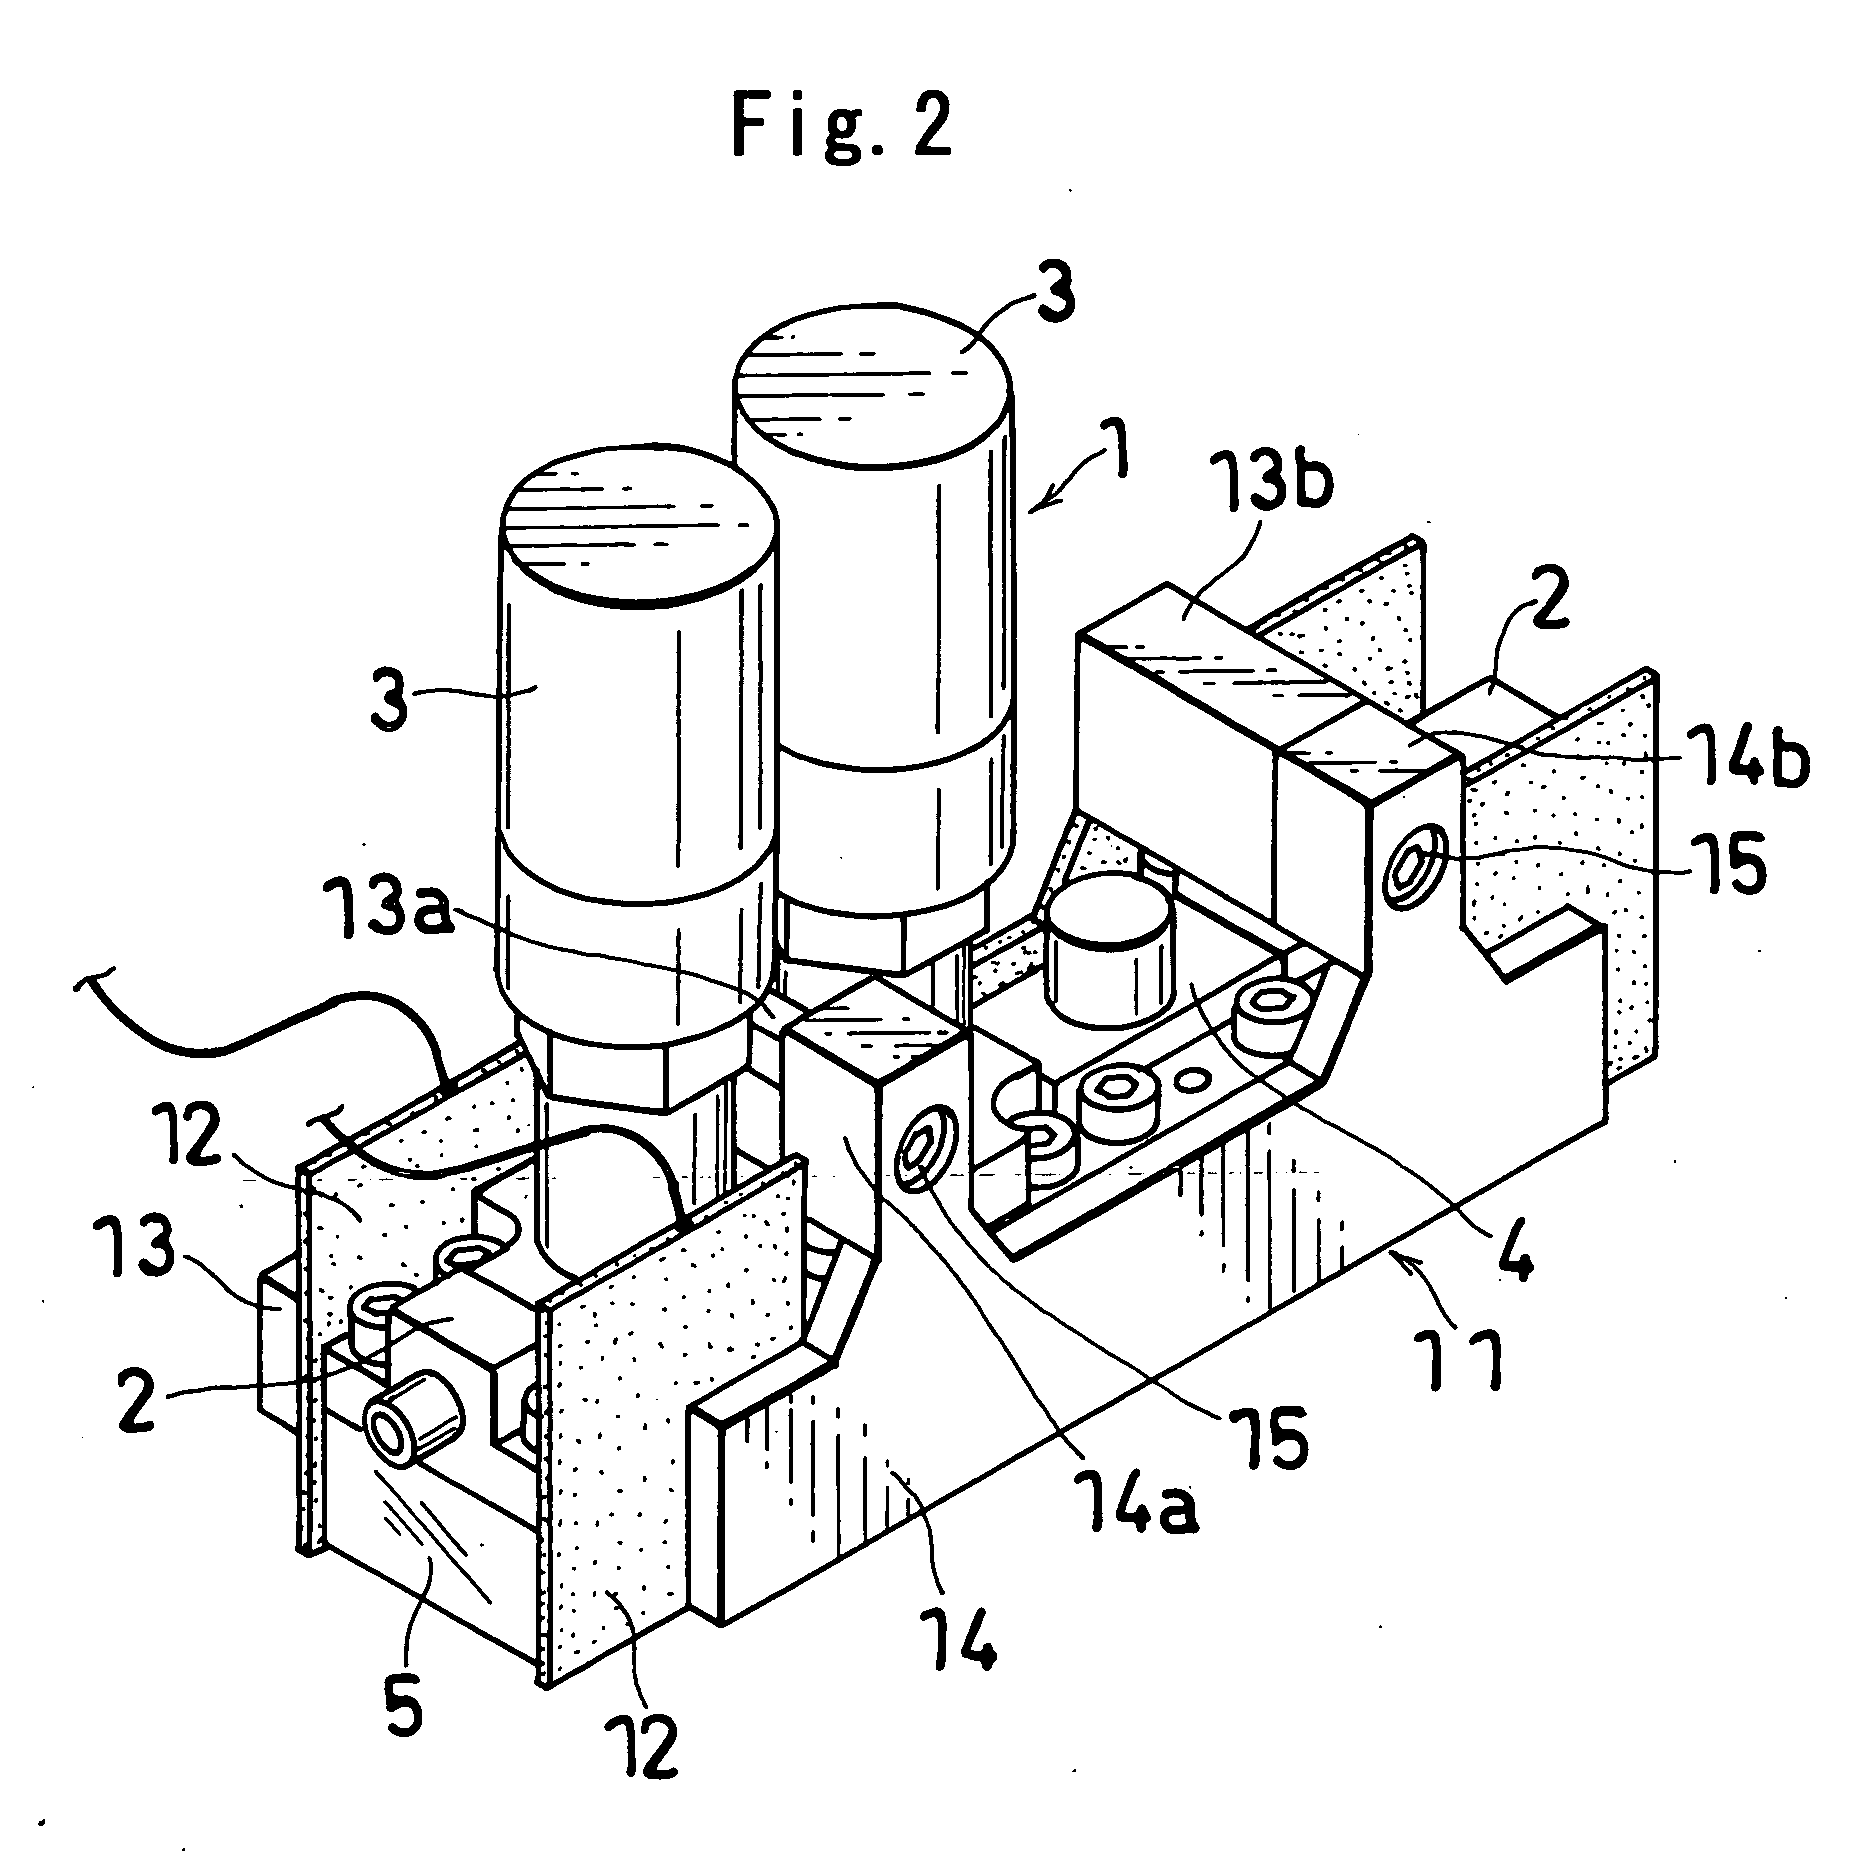 Fluid control apparatus with heating apparatus